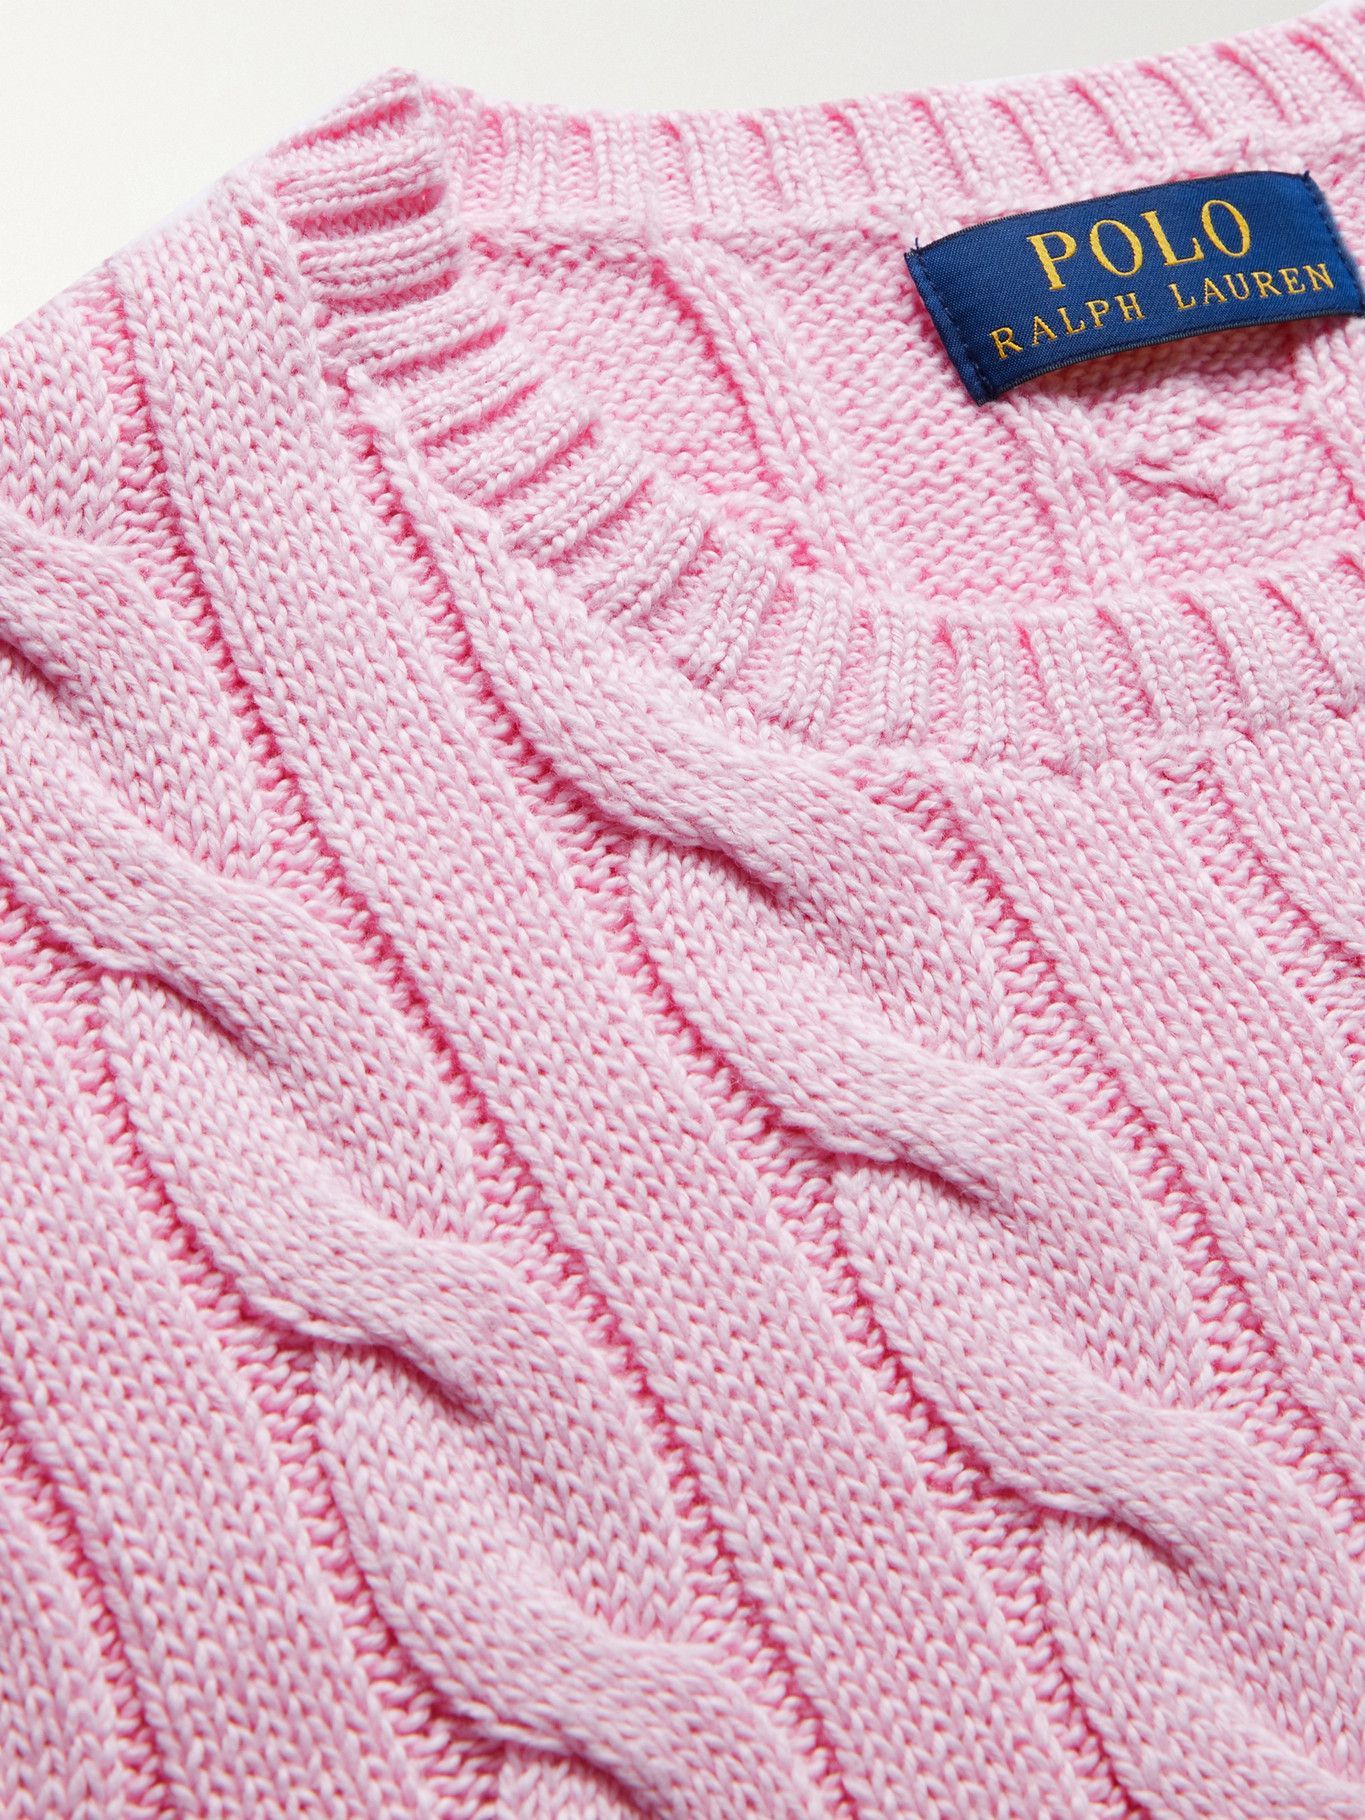 POLO RALPH LAUREN - Cable-Knit Cotton Sweater - Pink Polo Ralph Lauren